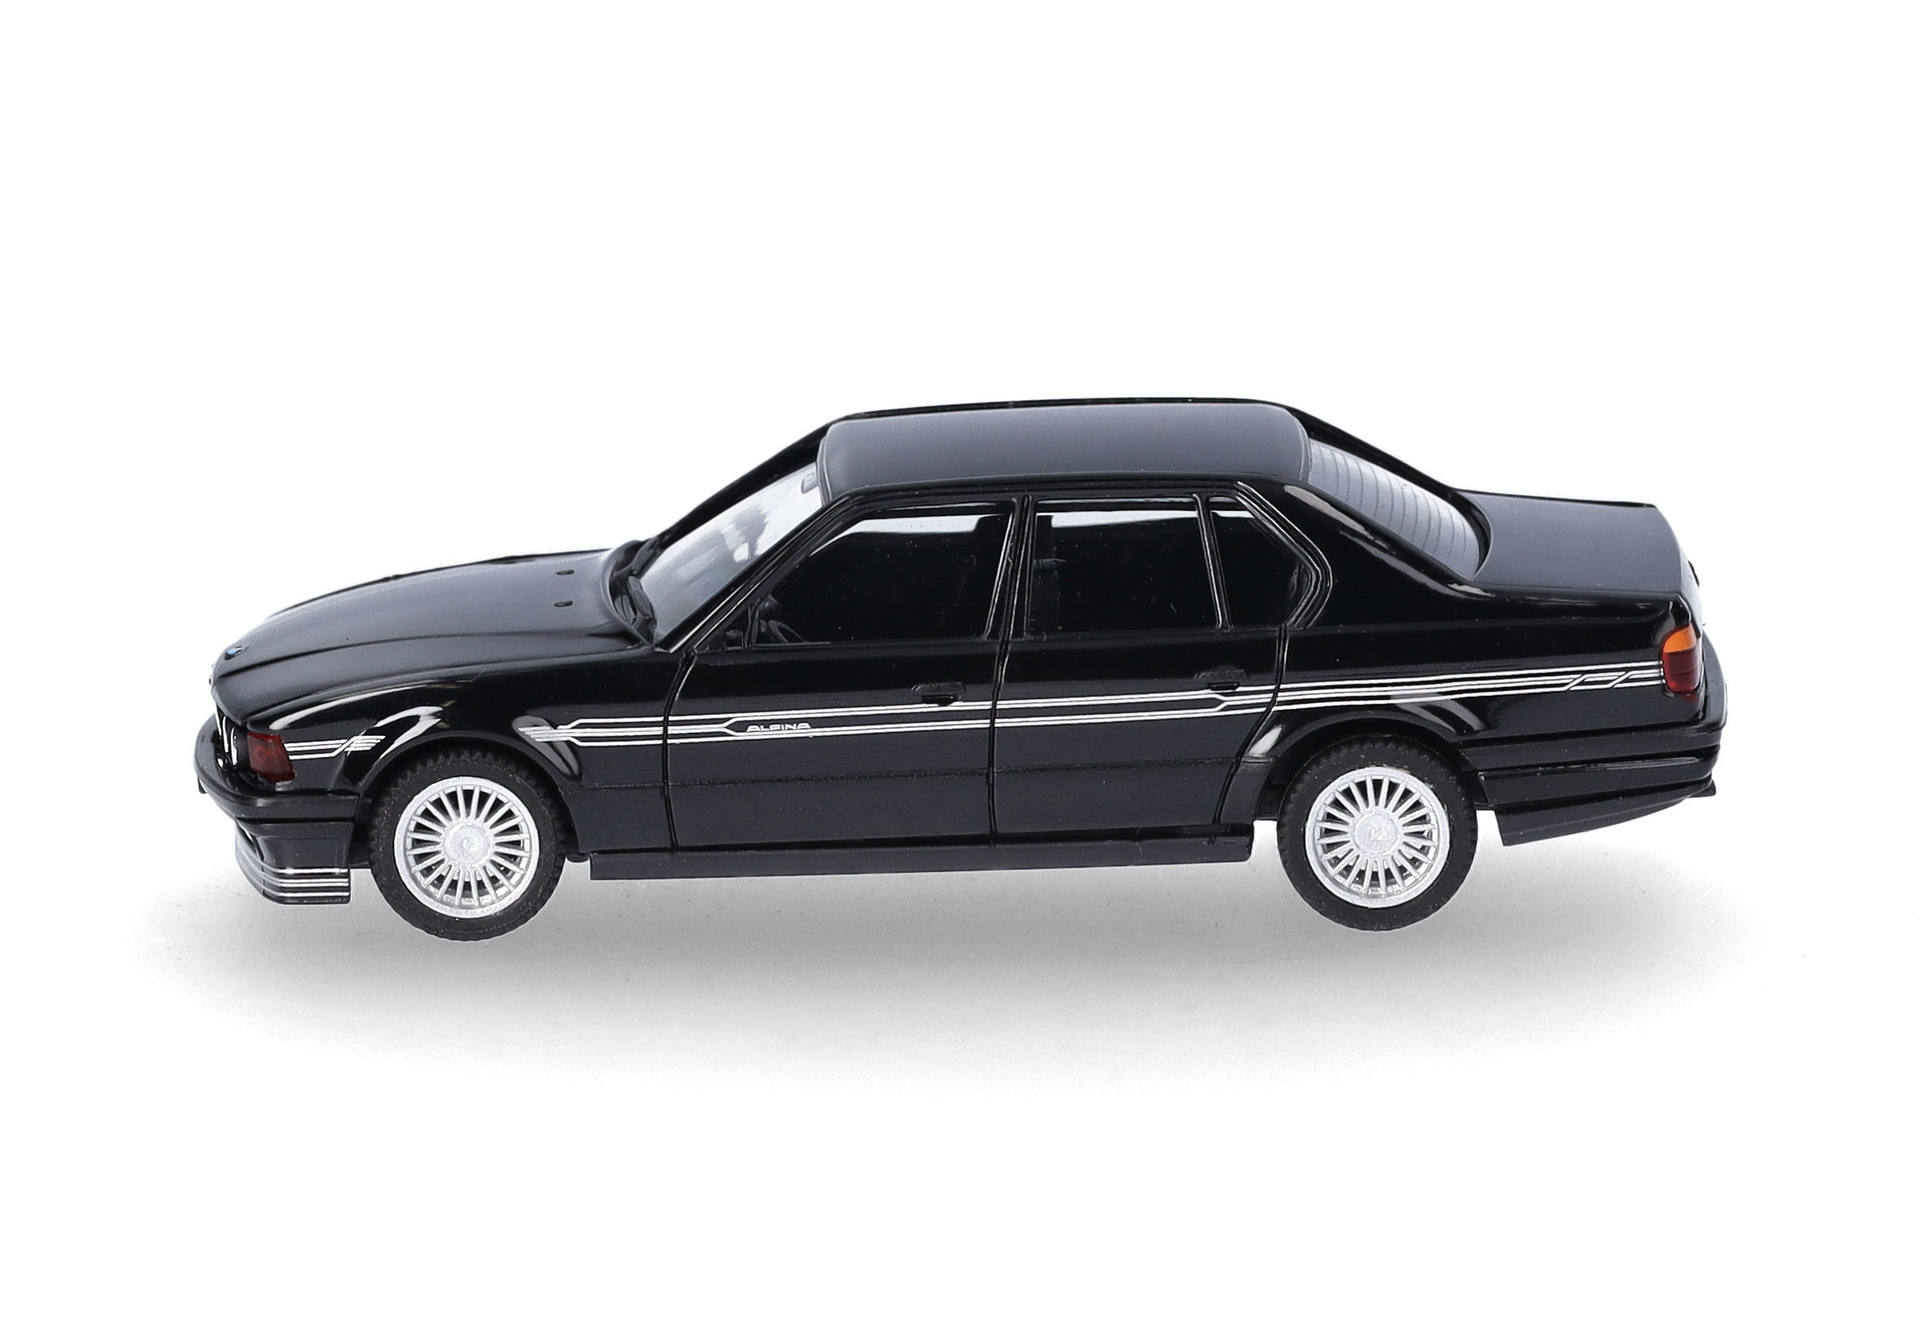 BMW Alpina B11 3.5 liter, black with silver print